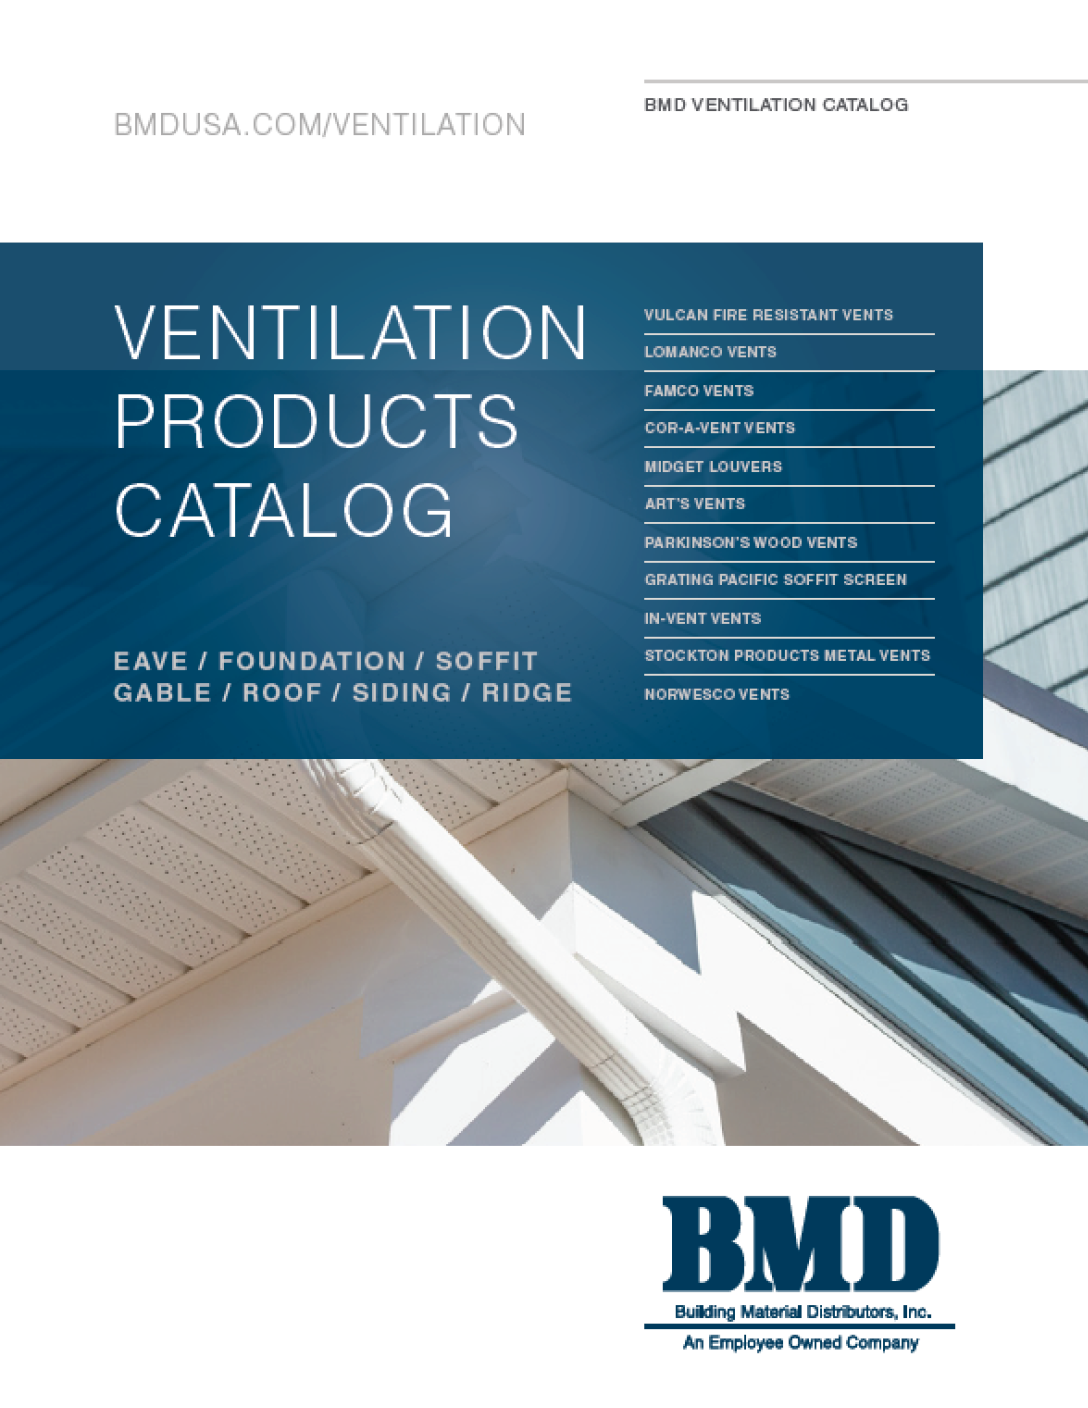 BMD Ventilation Catalog for builders